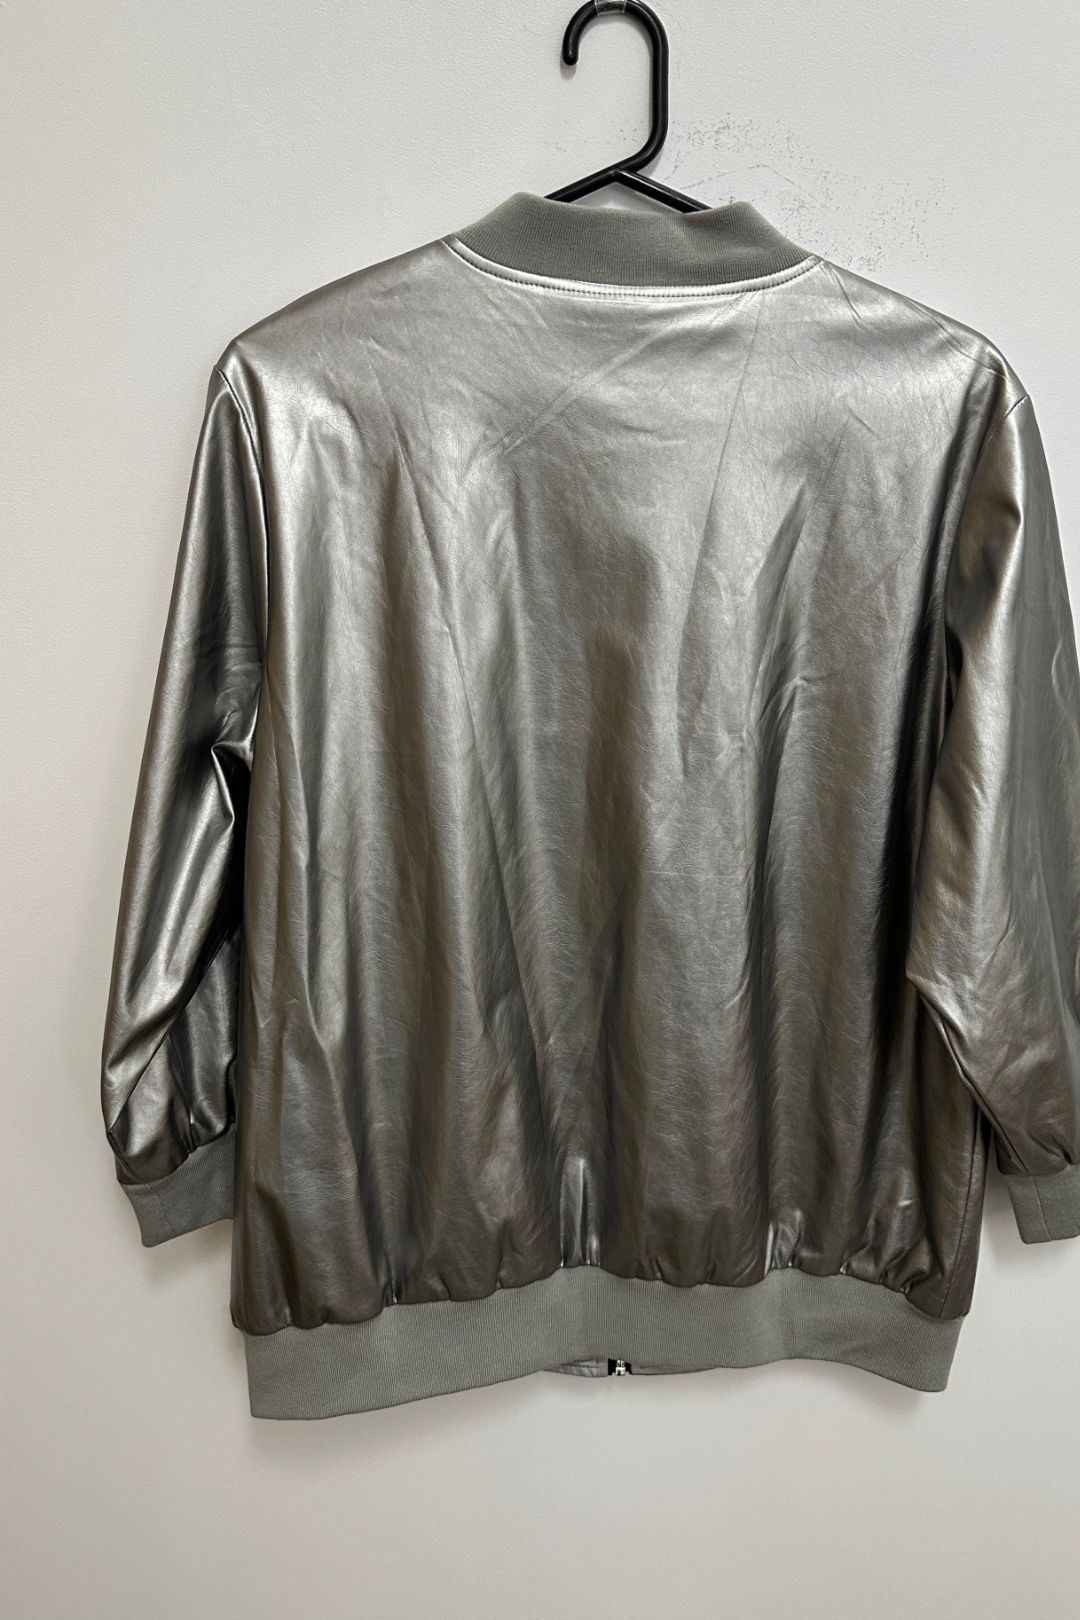 Motto Silver Vegan Leather Bomber Jacket